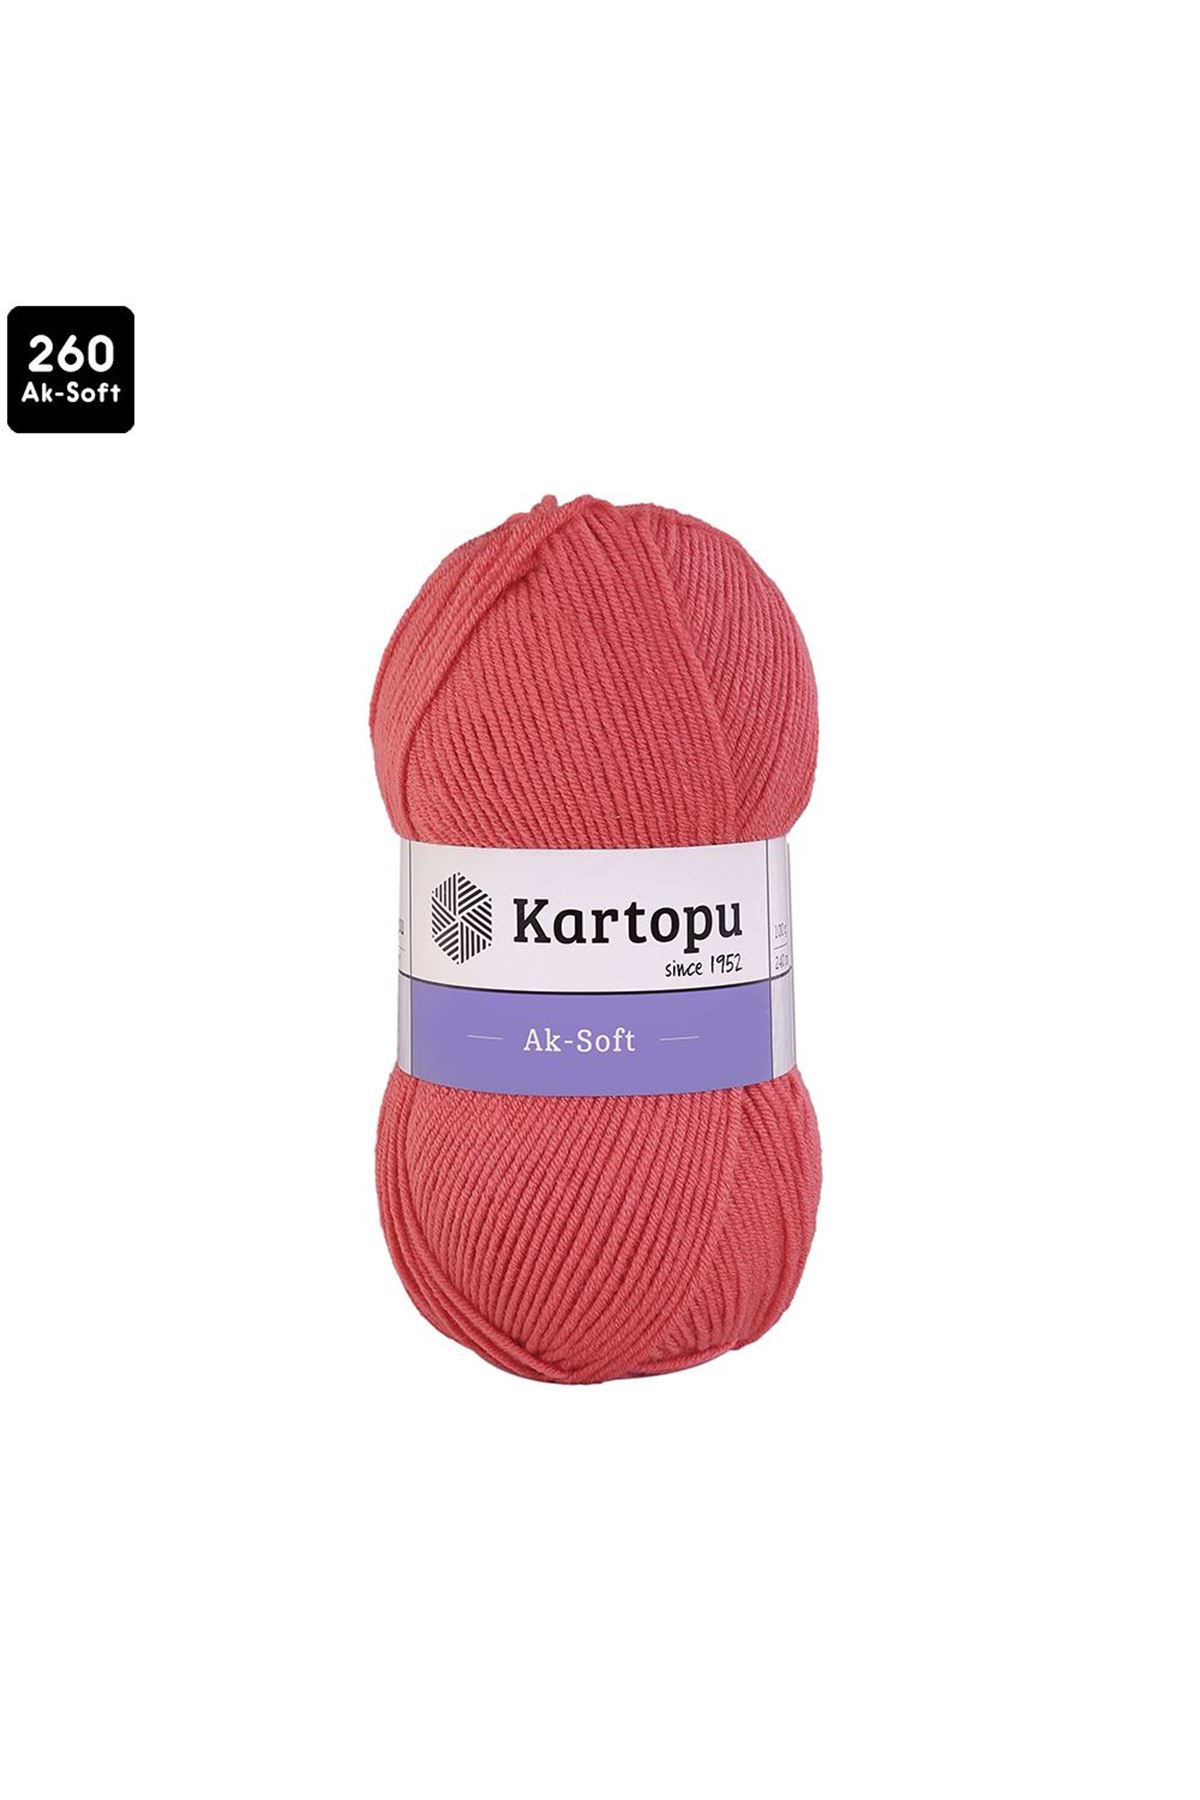 Kartopu Ak-Soft Renk No:260